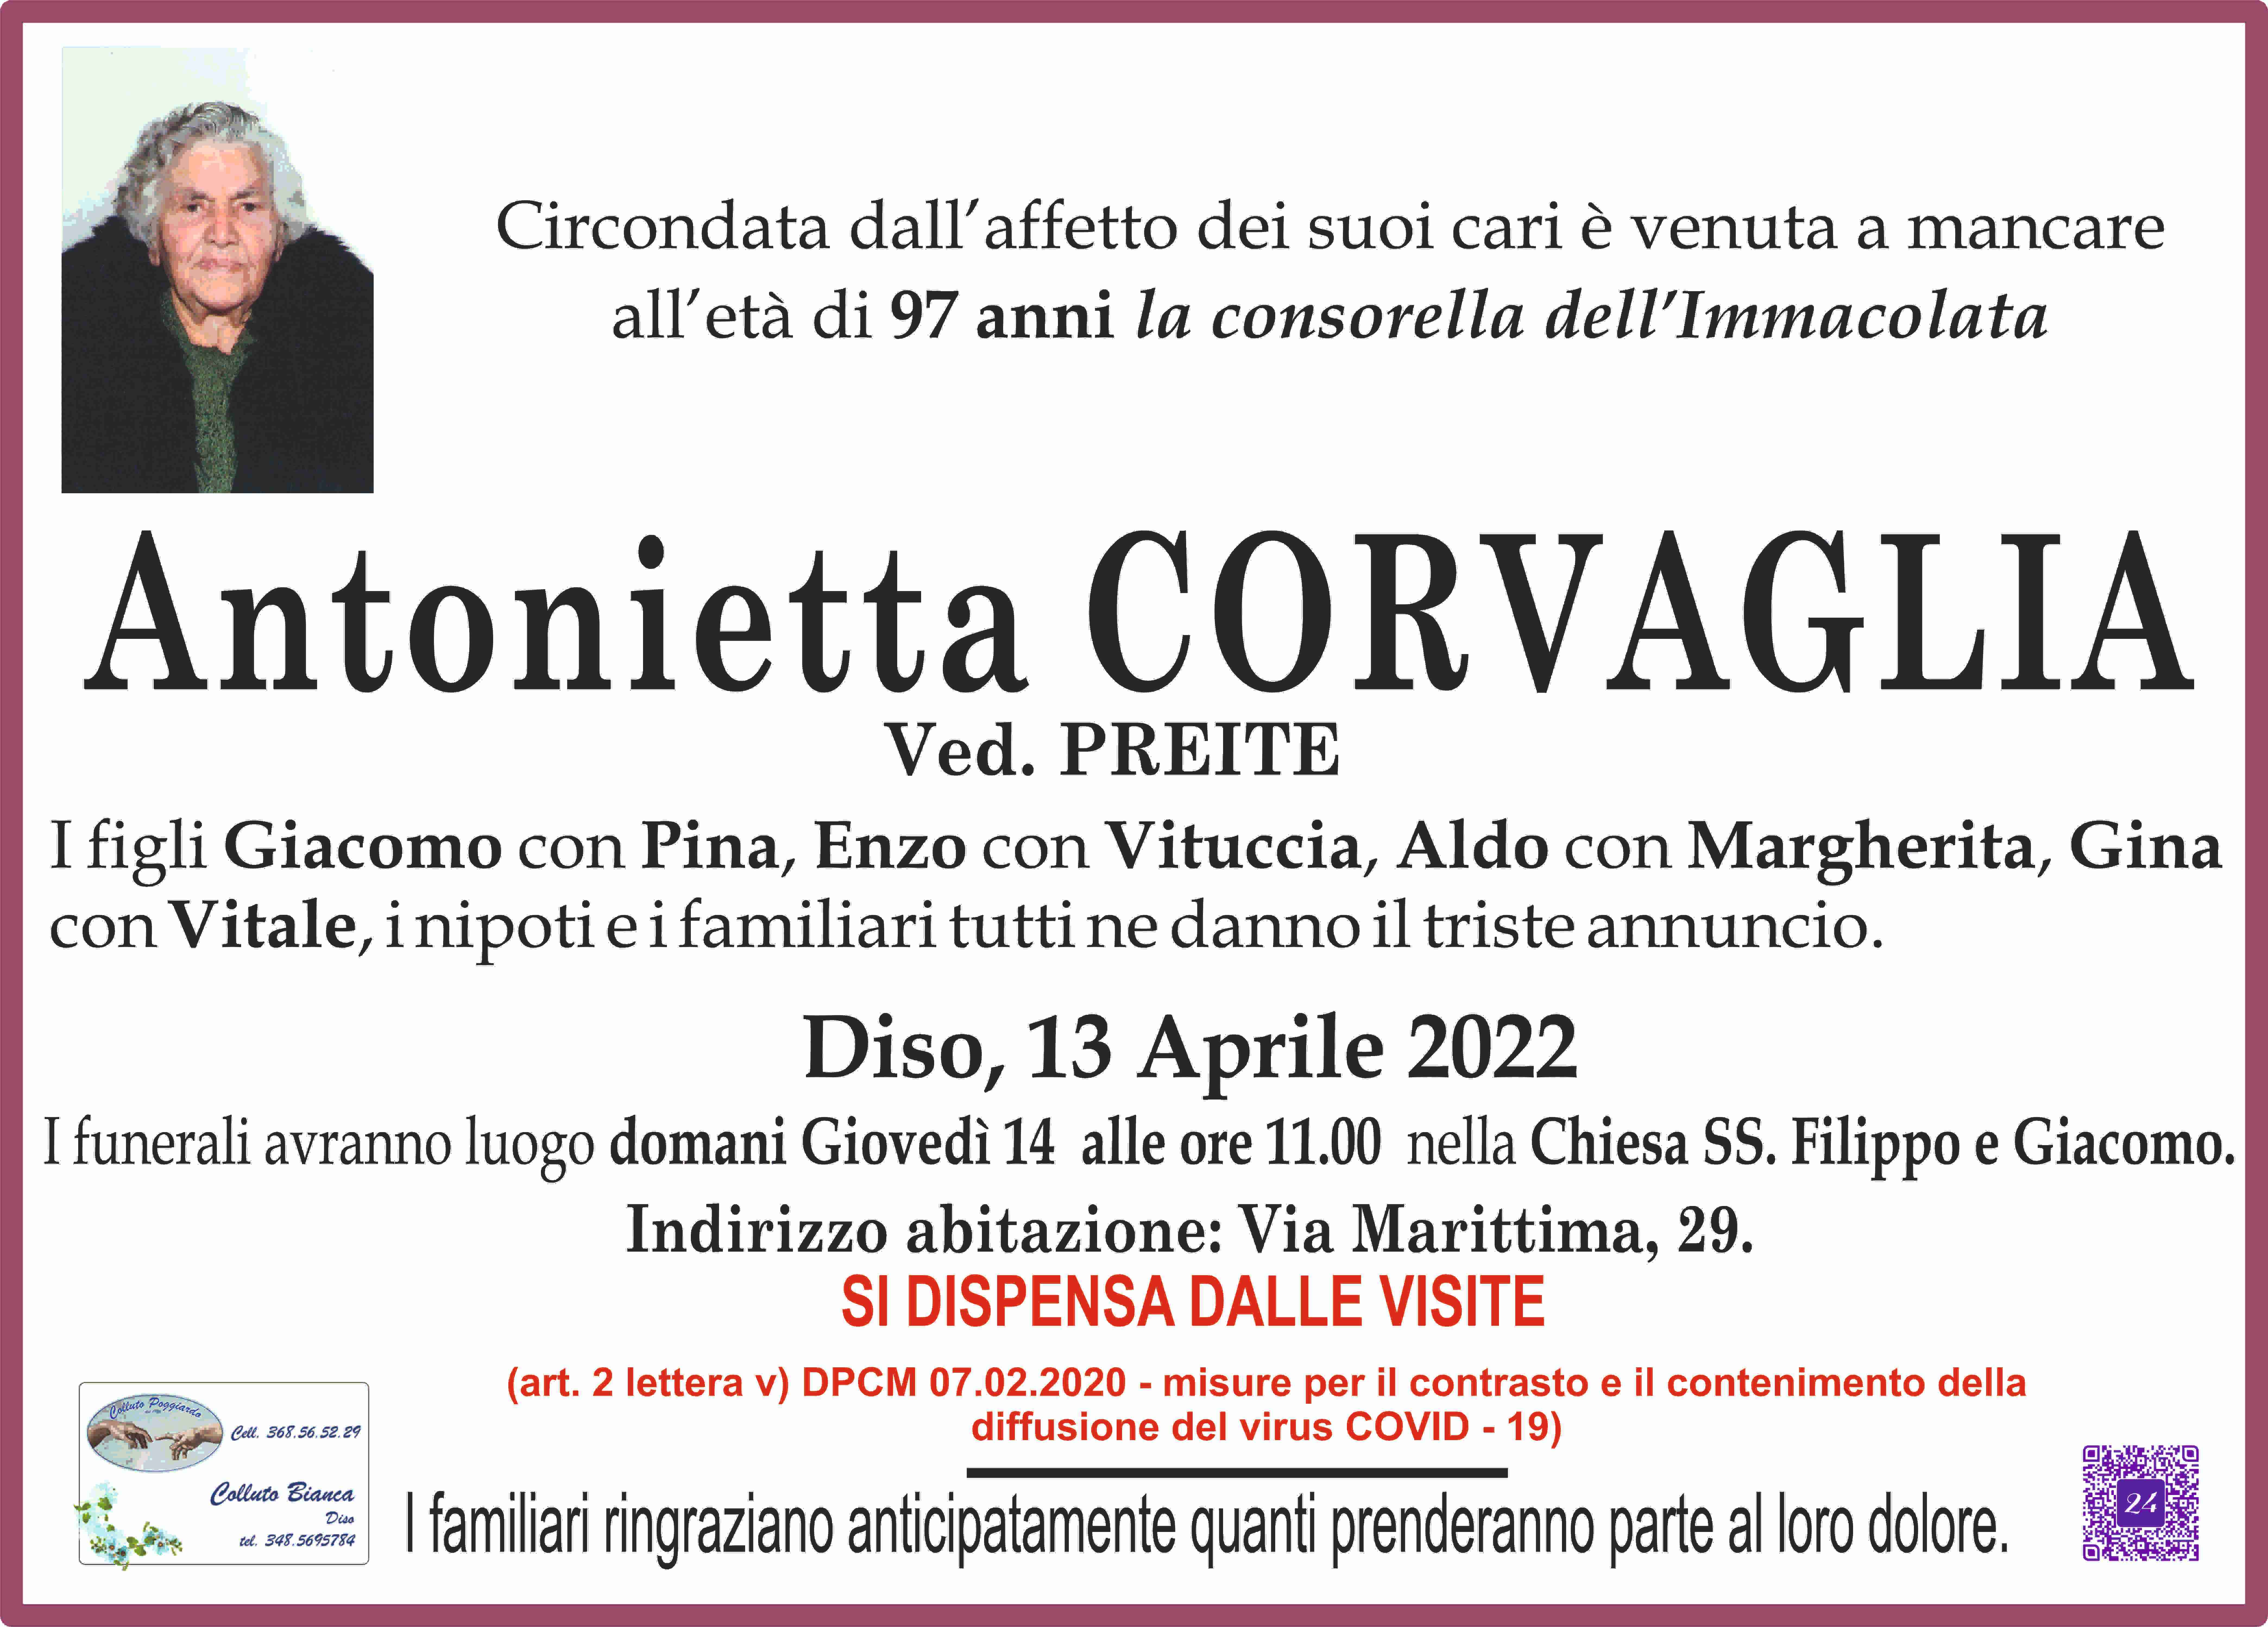 Antonietta Corvaglia